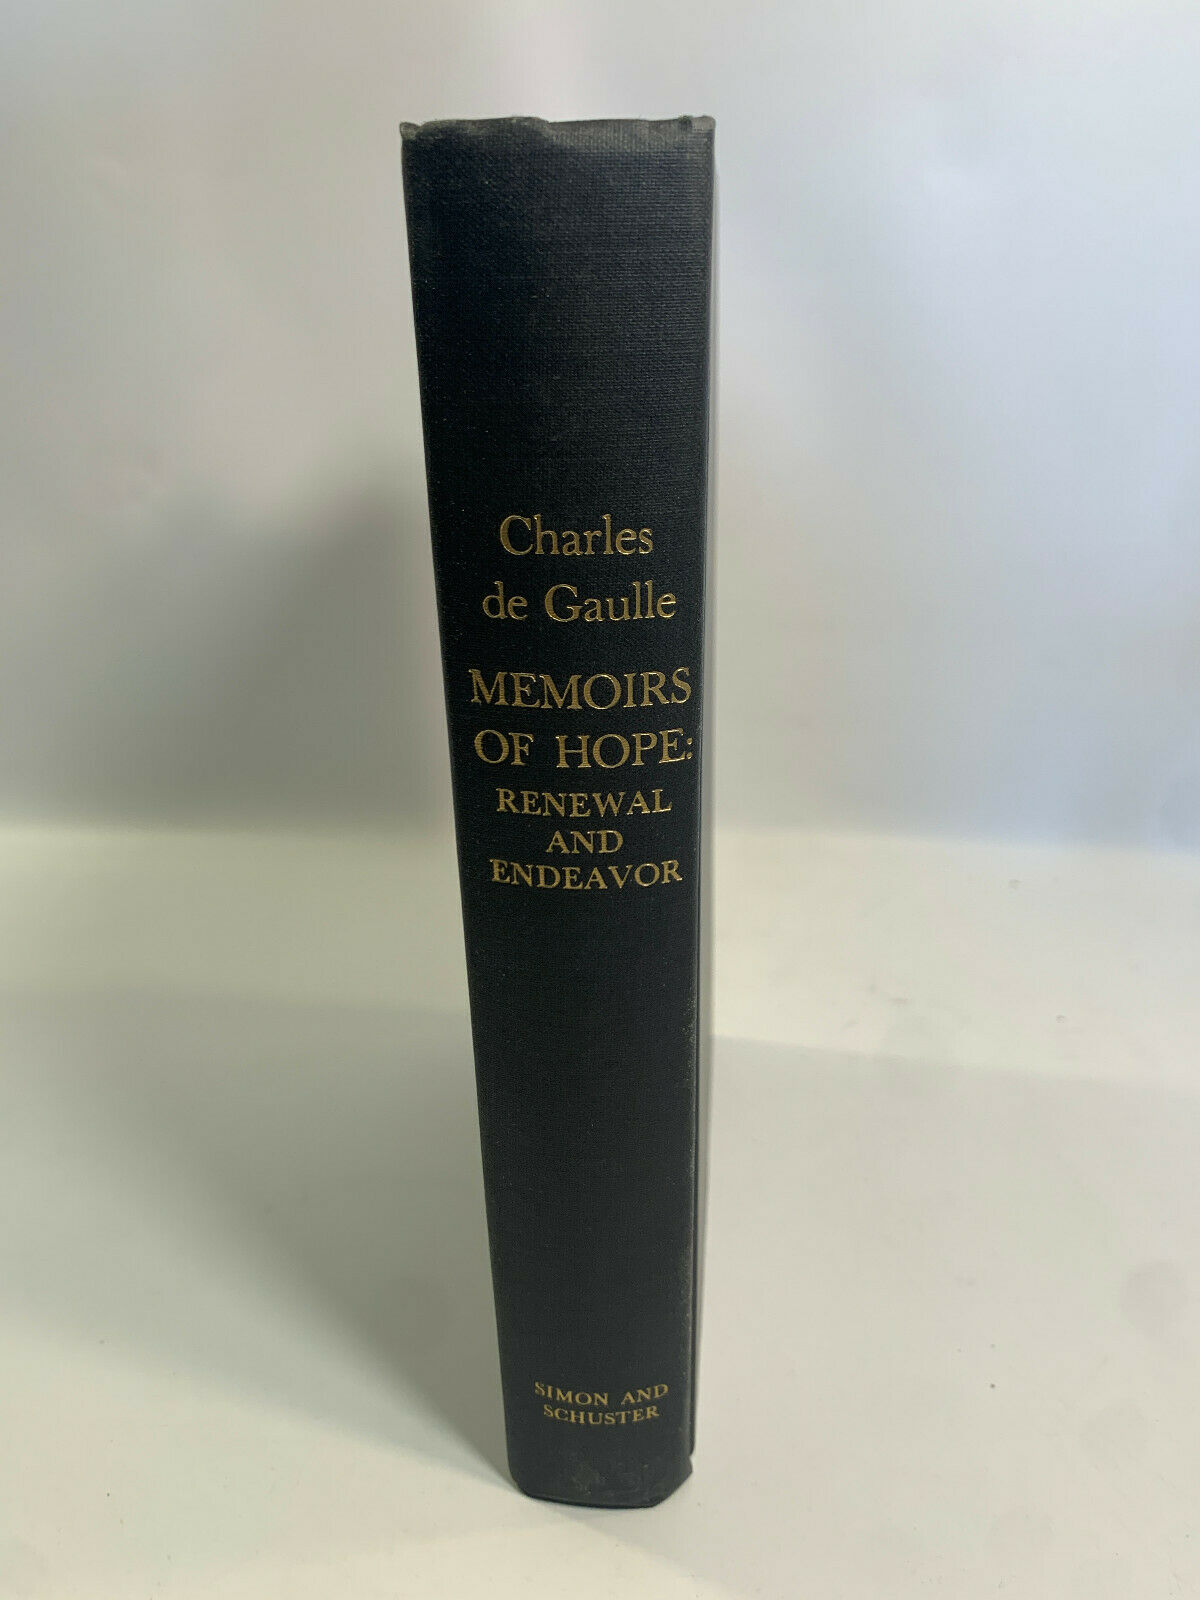 Charles de Gaulle Memoirs of Hope: Renewal and Endeavor